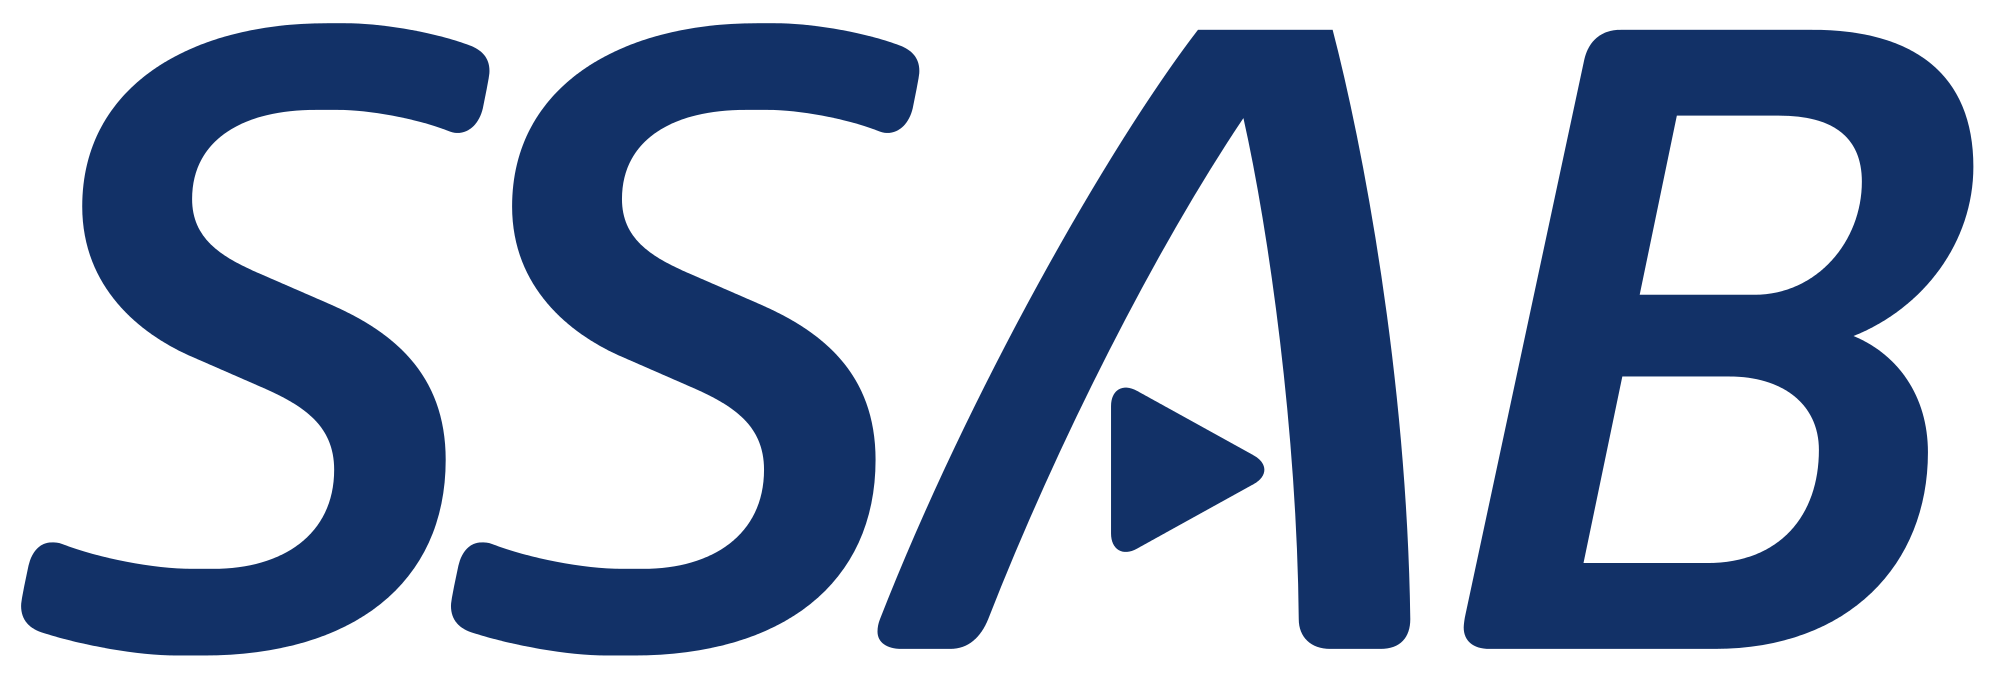 SSAB-logo.png